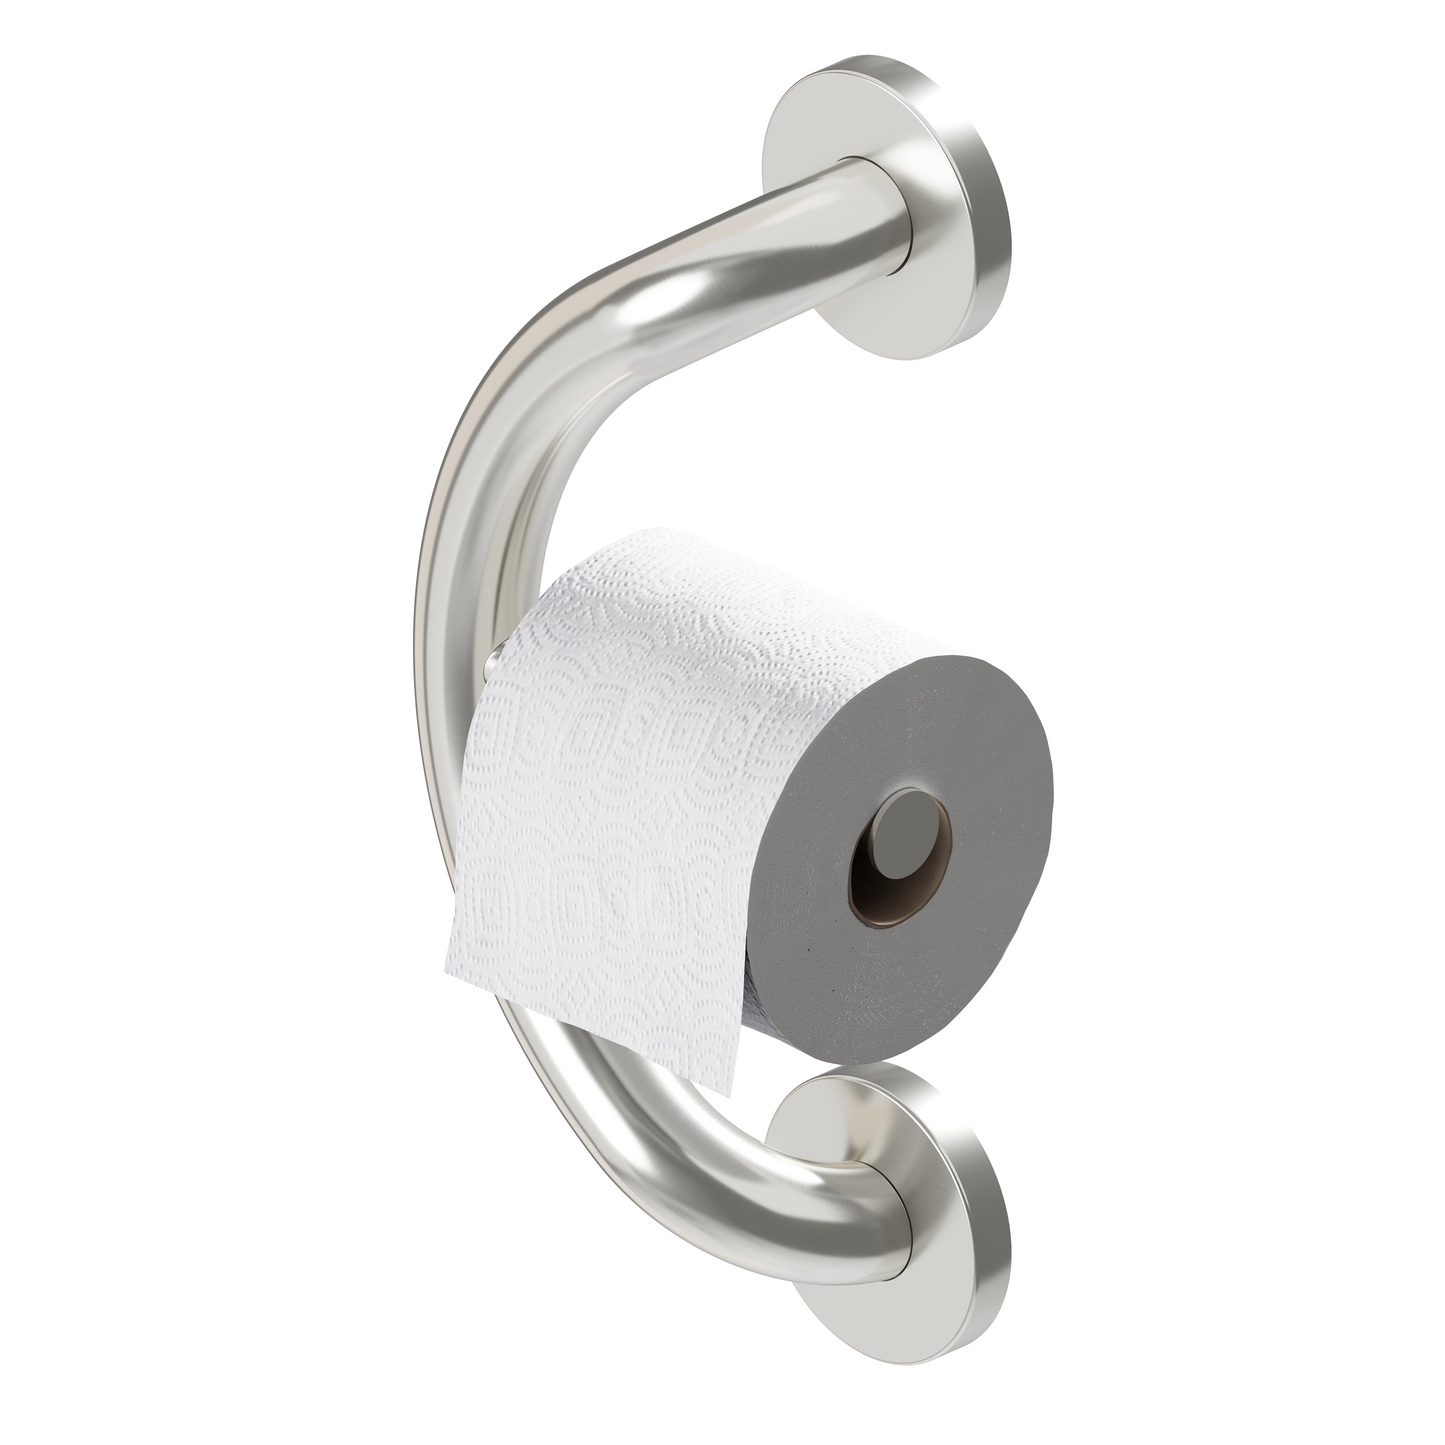 Toilet Paper Holder Grab Bar brushed nickel